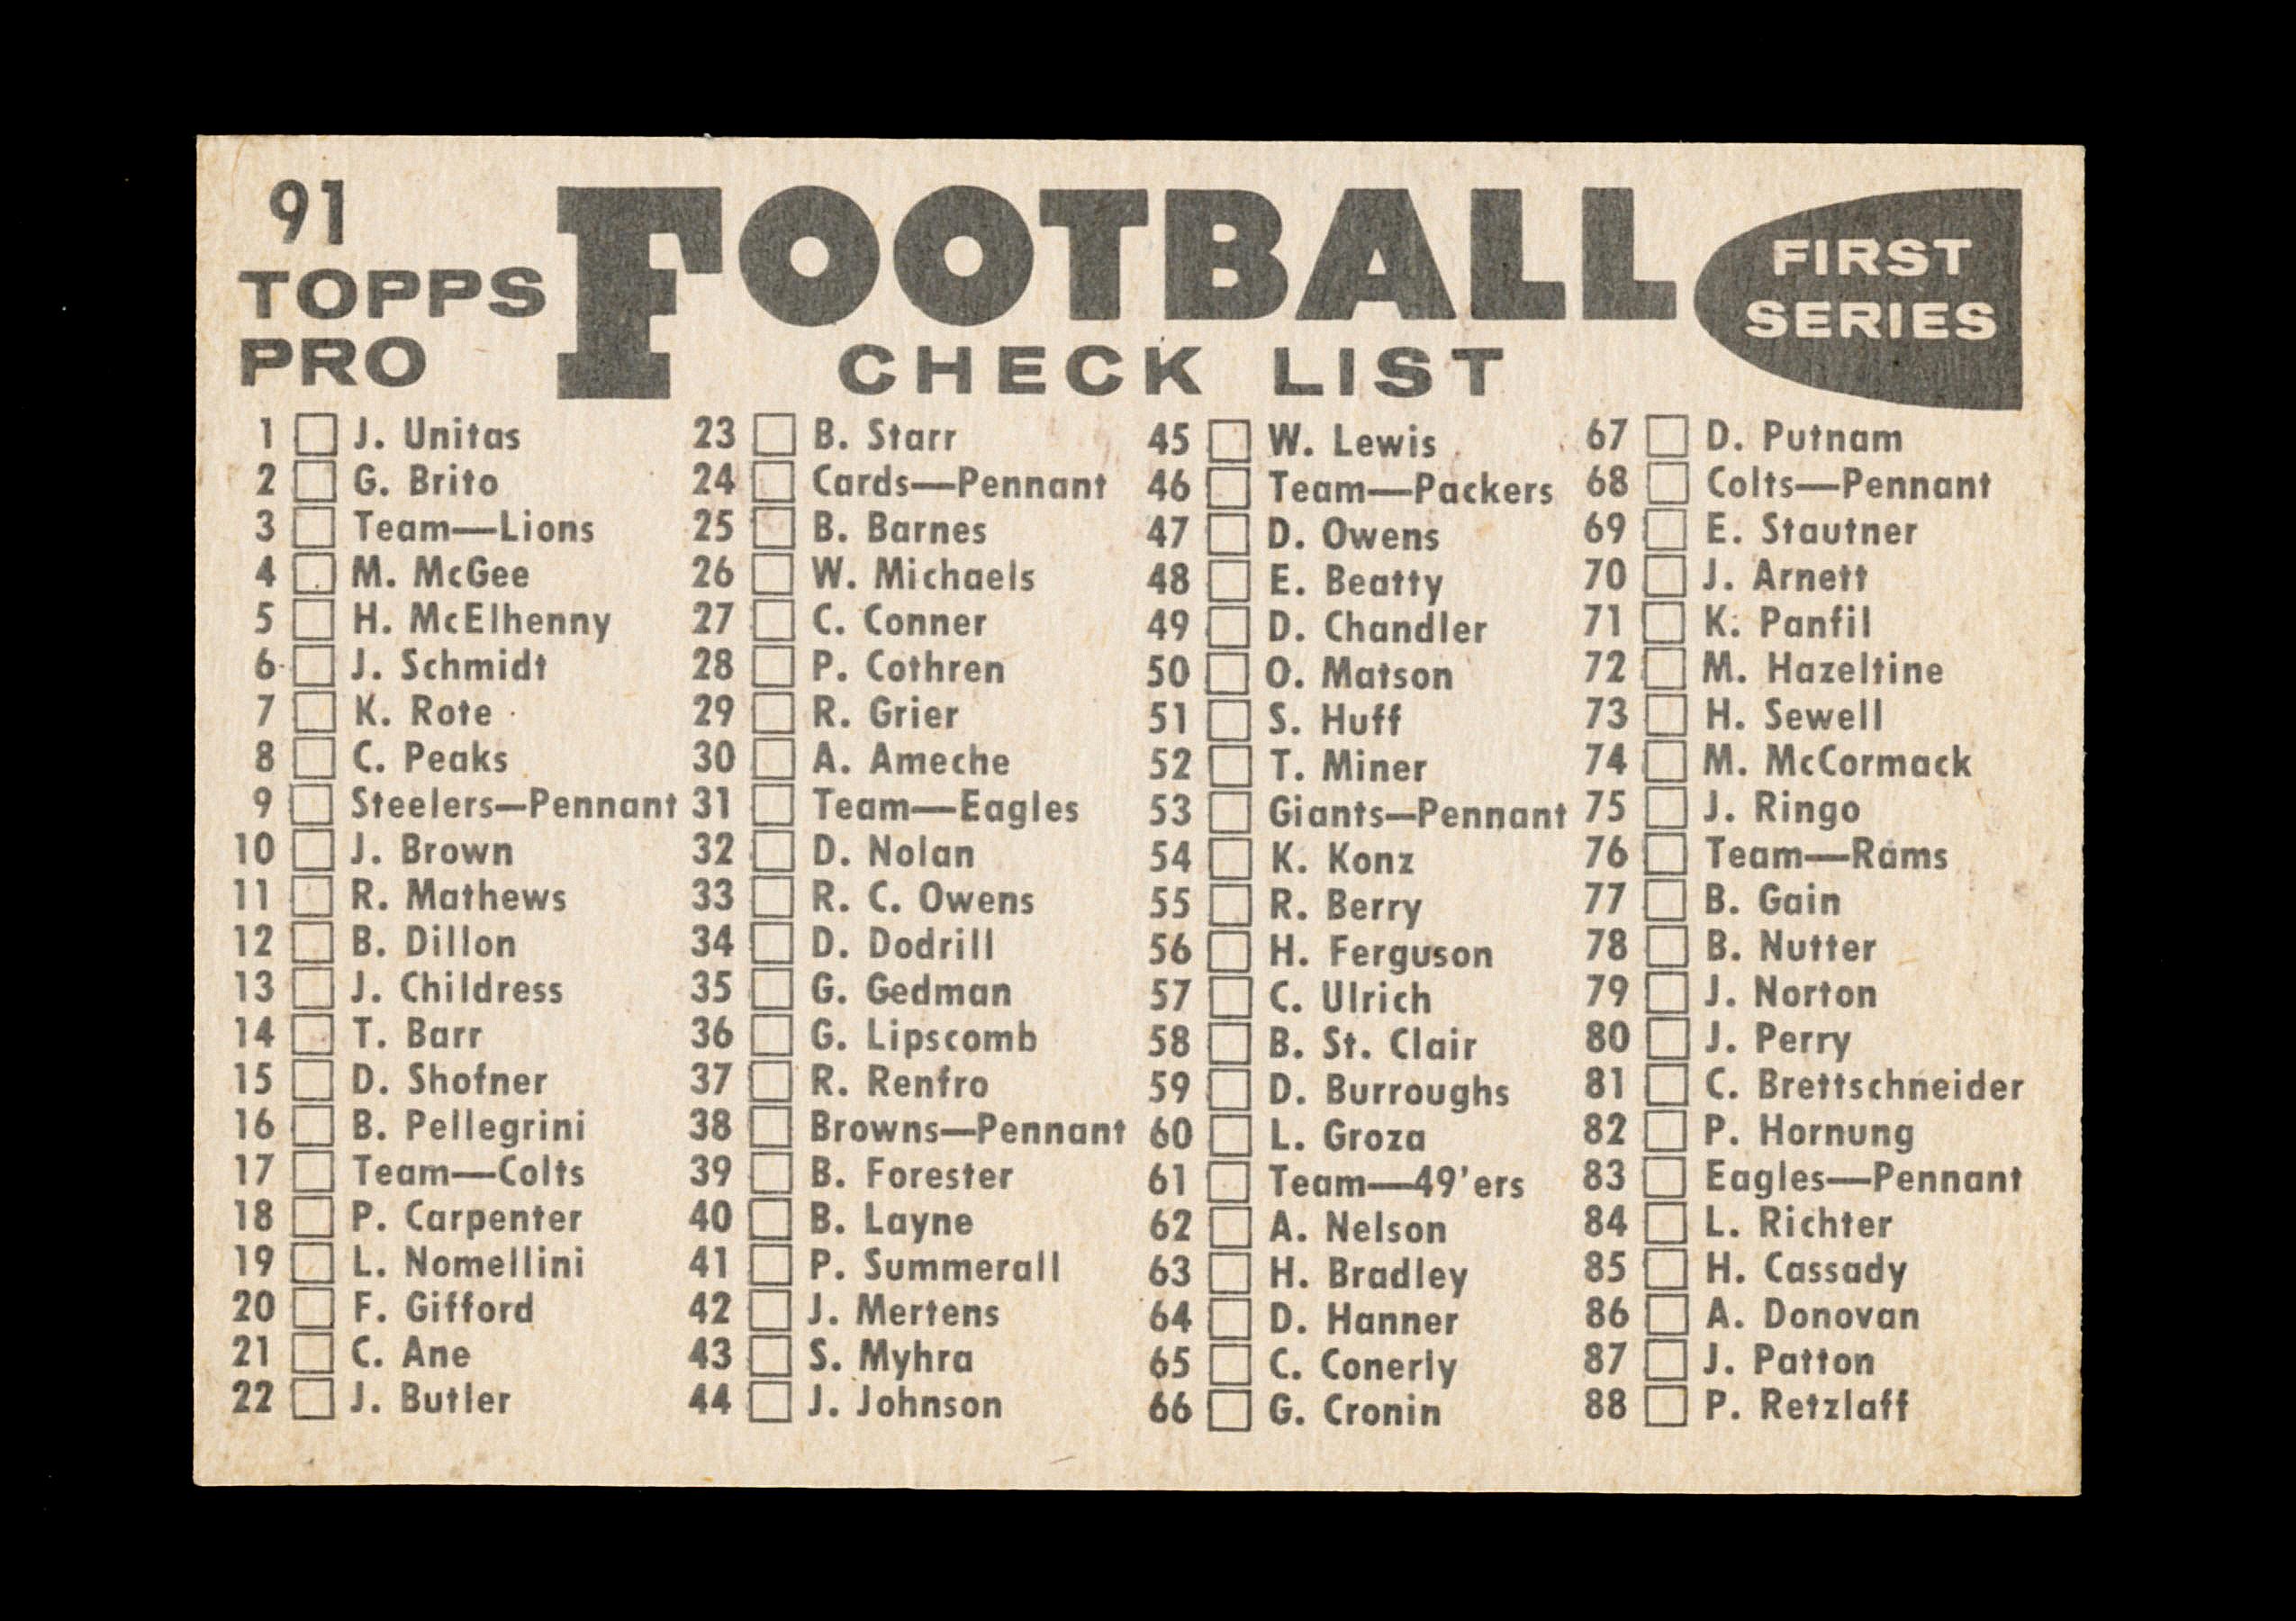 1959 Topps Football Card #91 Washington Redskins Team Card/Checklist (Unche